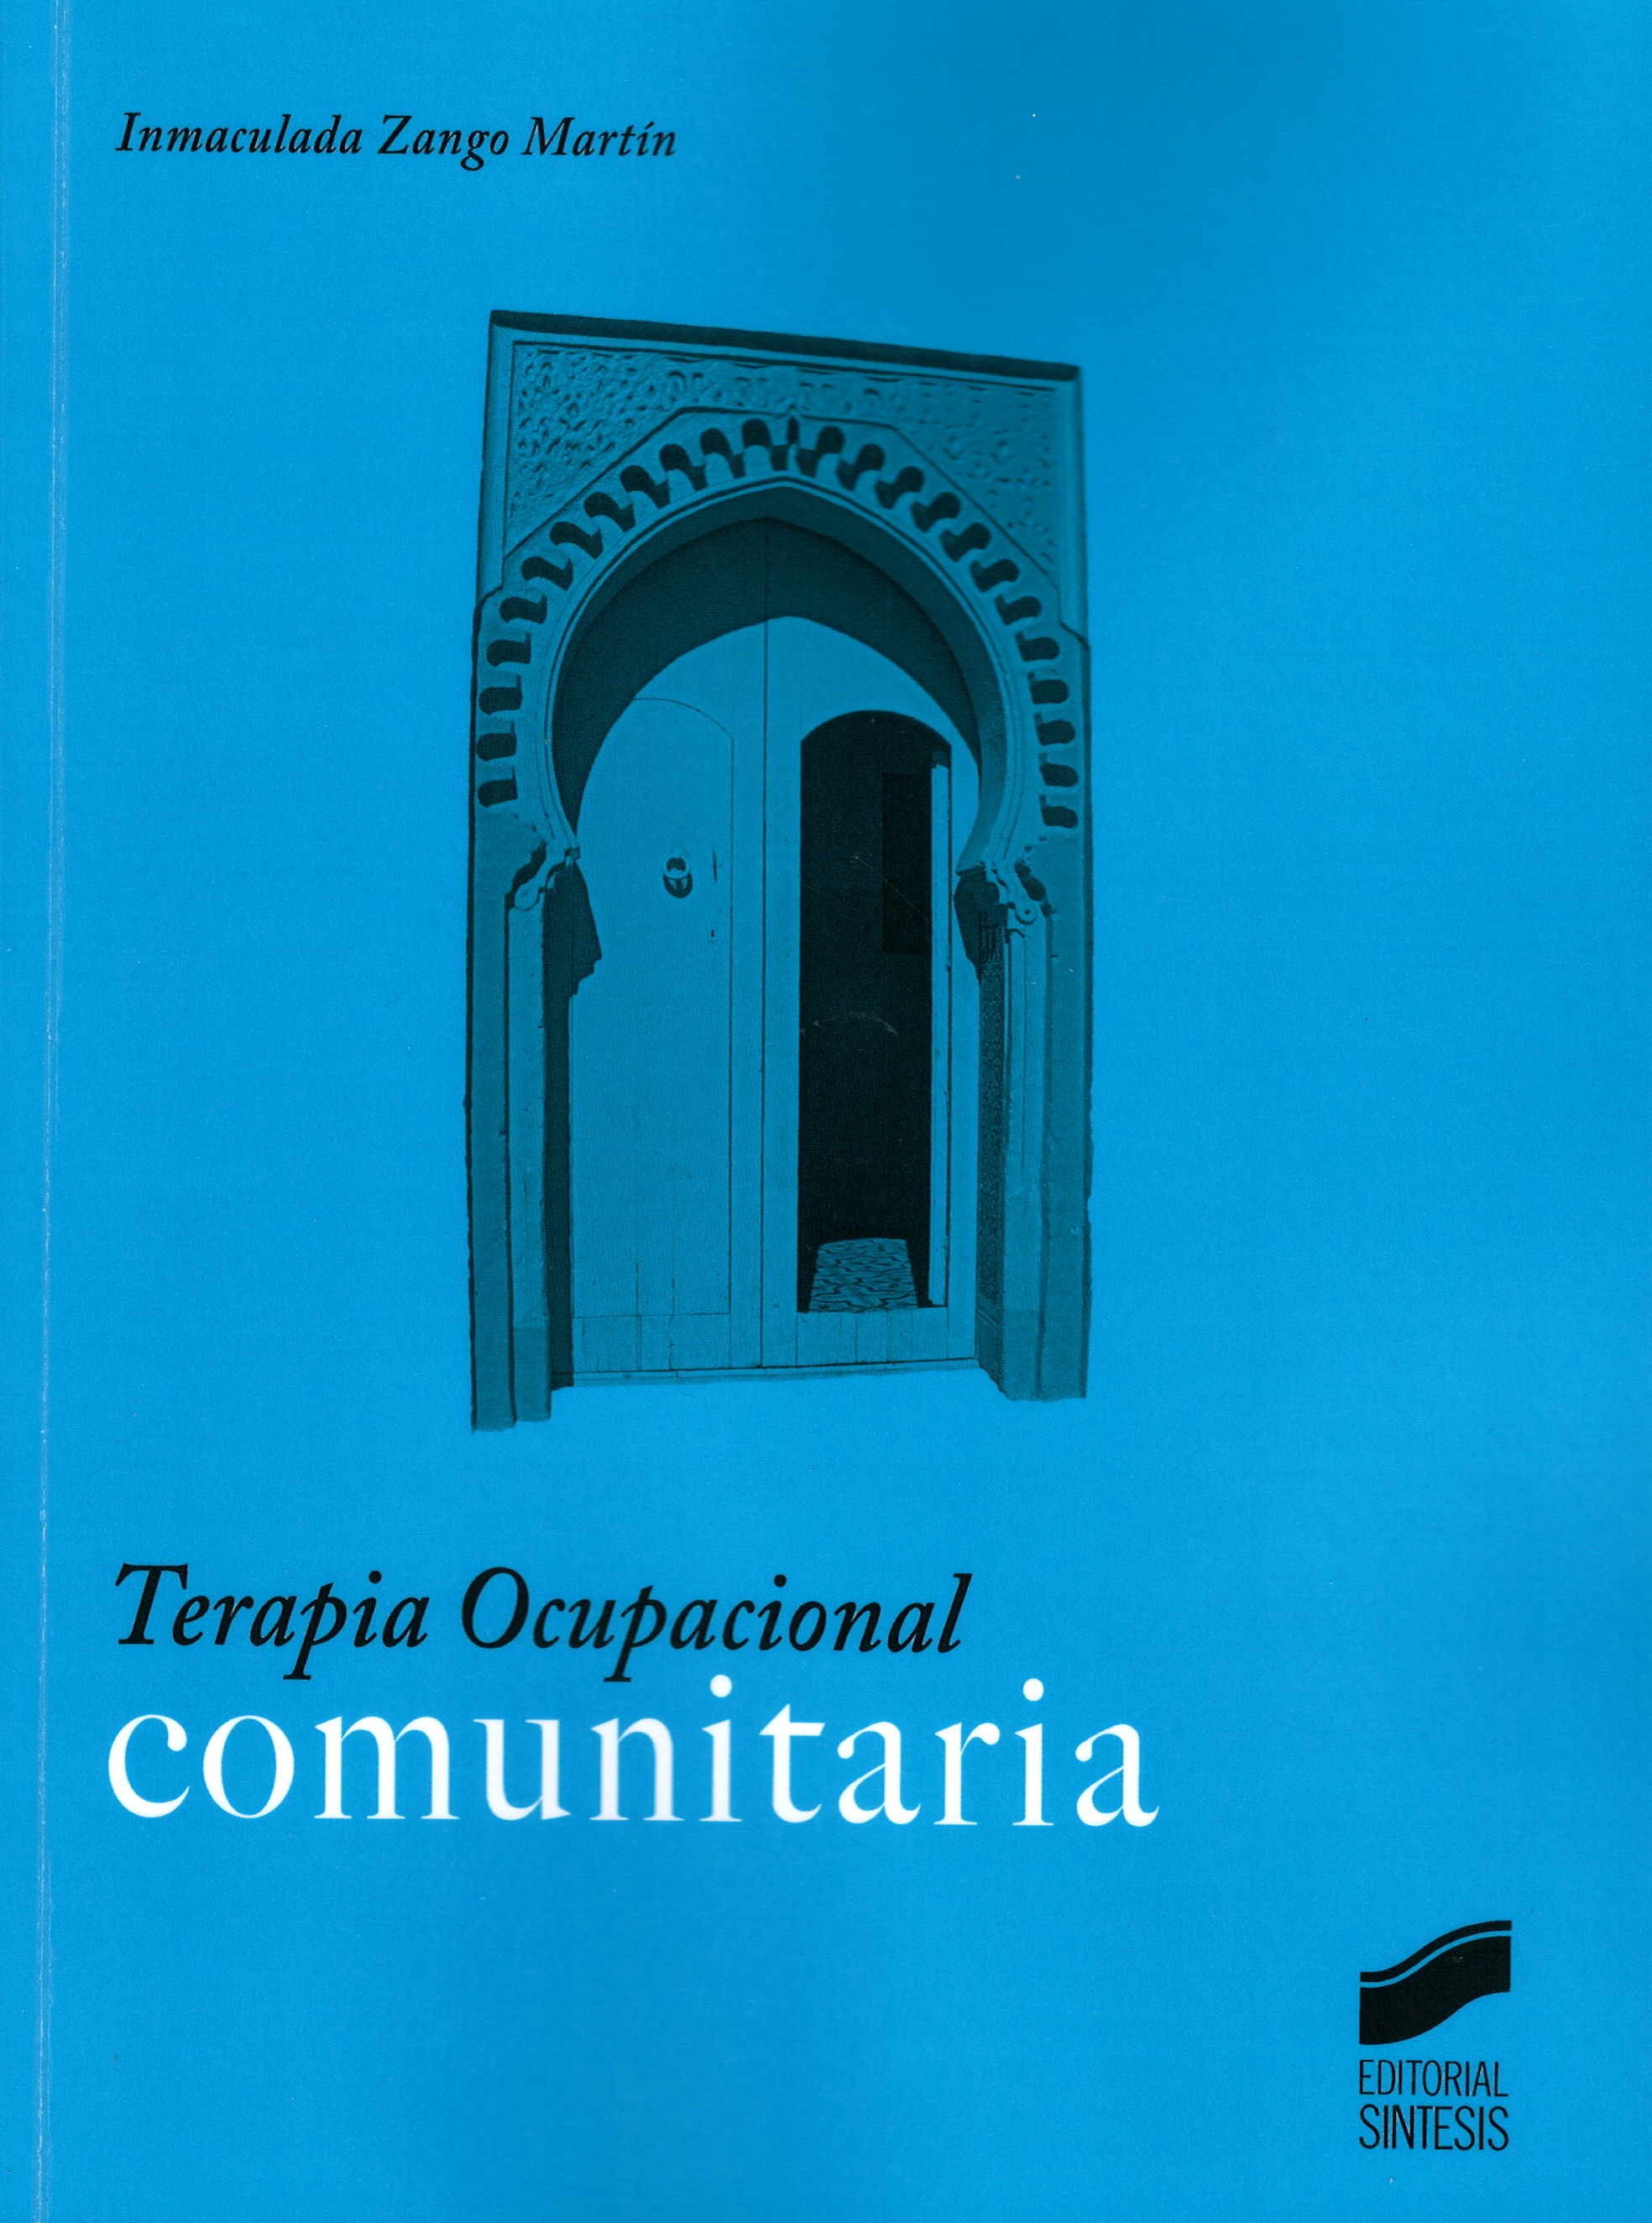 Imagen de portada del libro Terapia ocupacional comunitaria